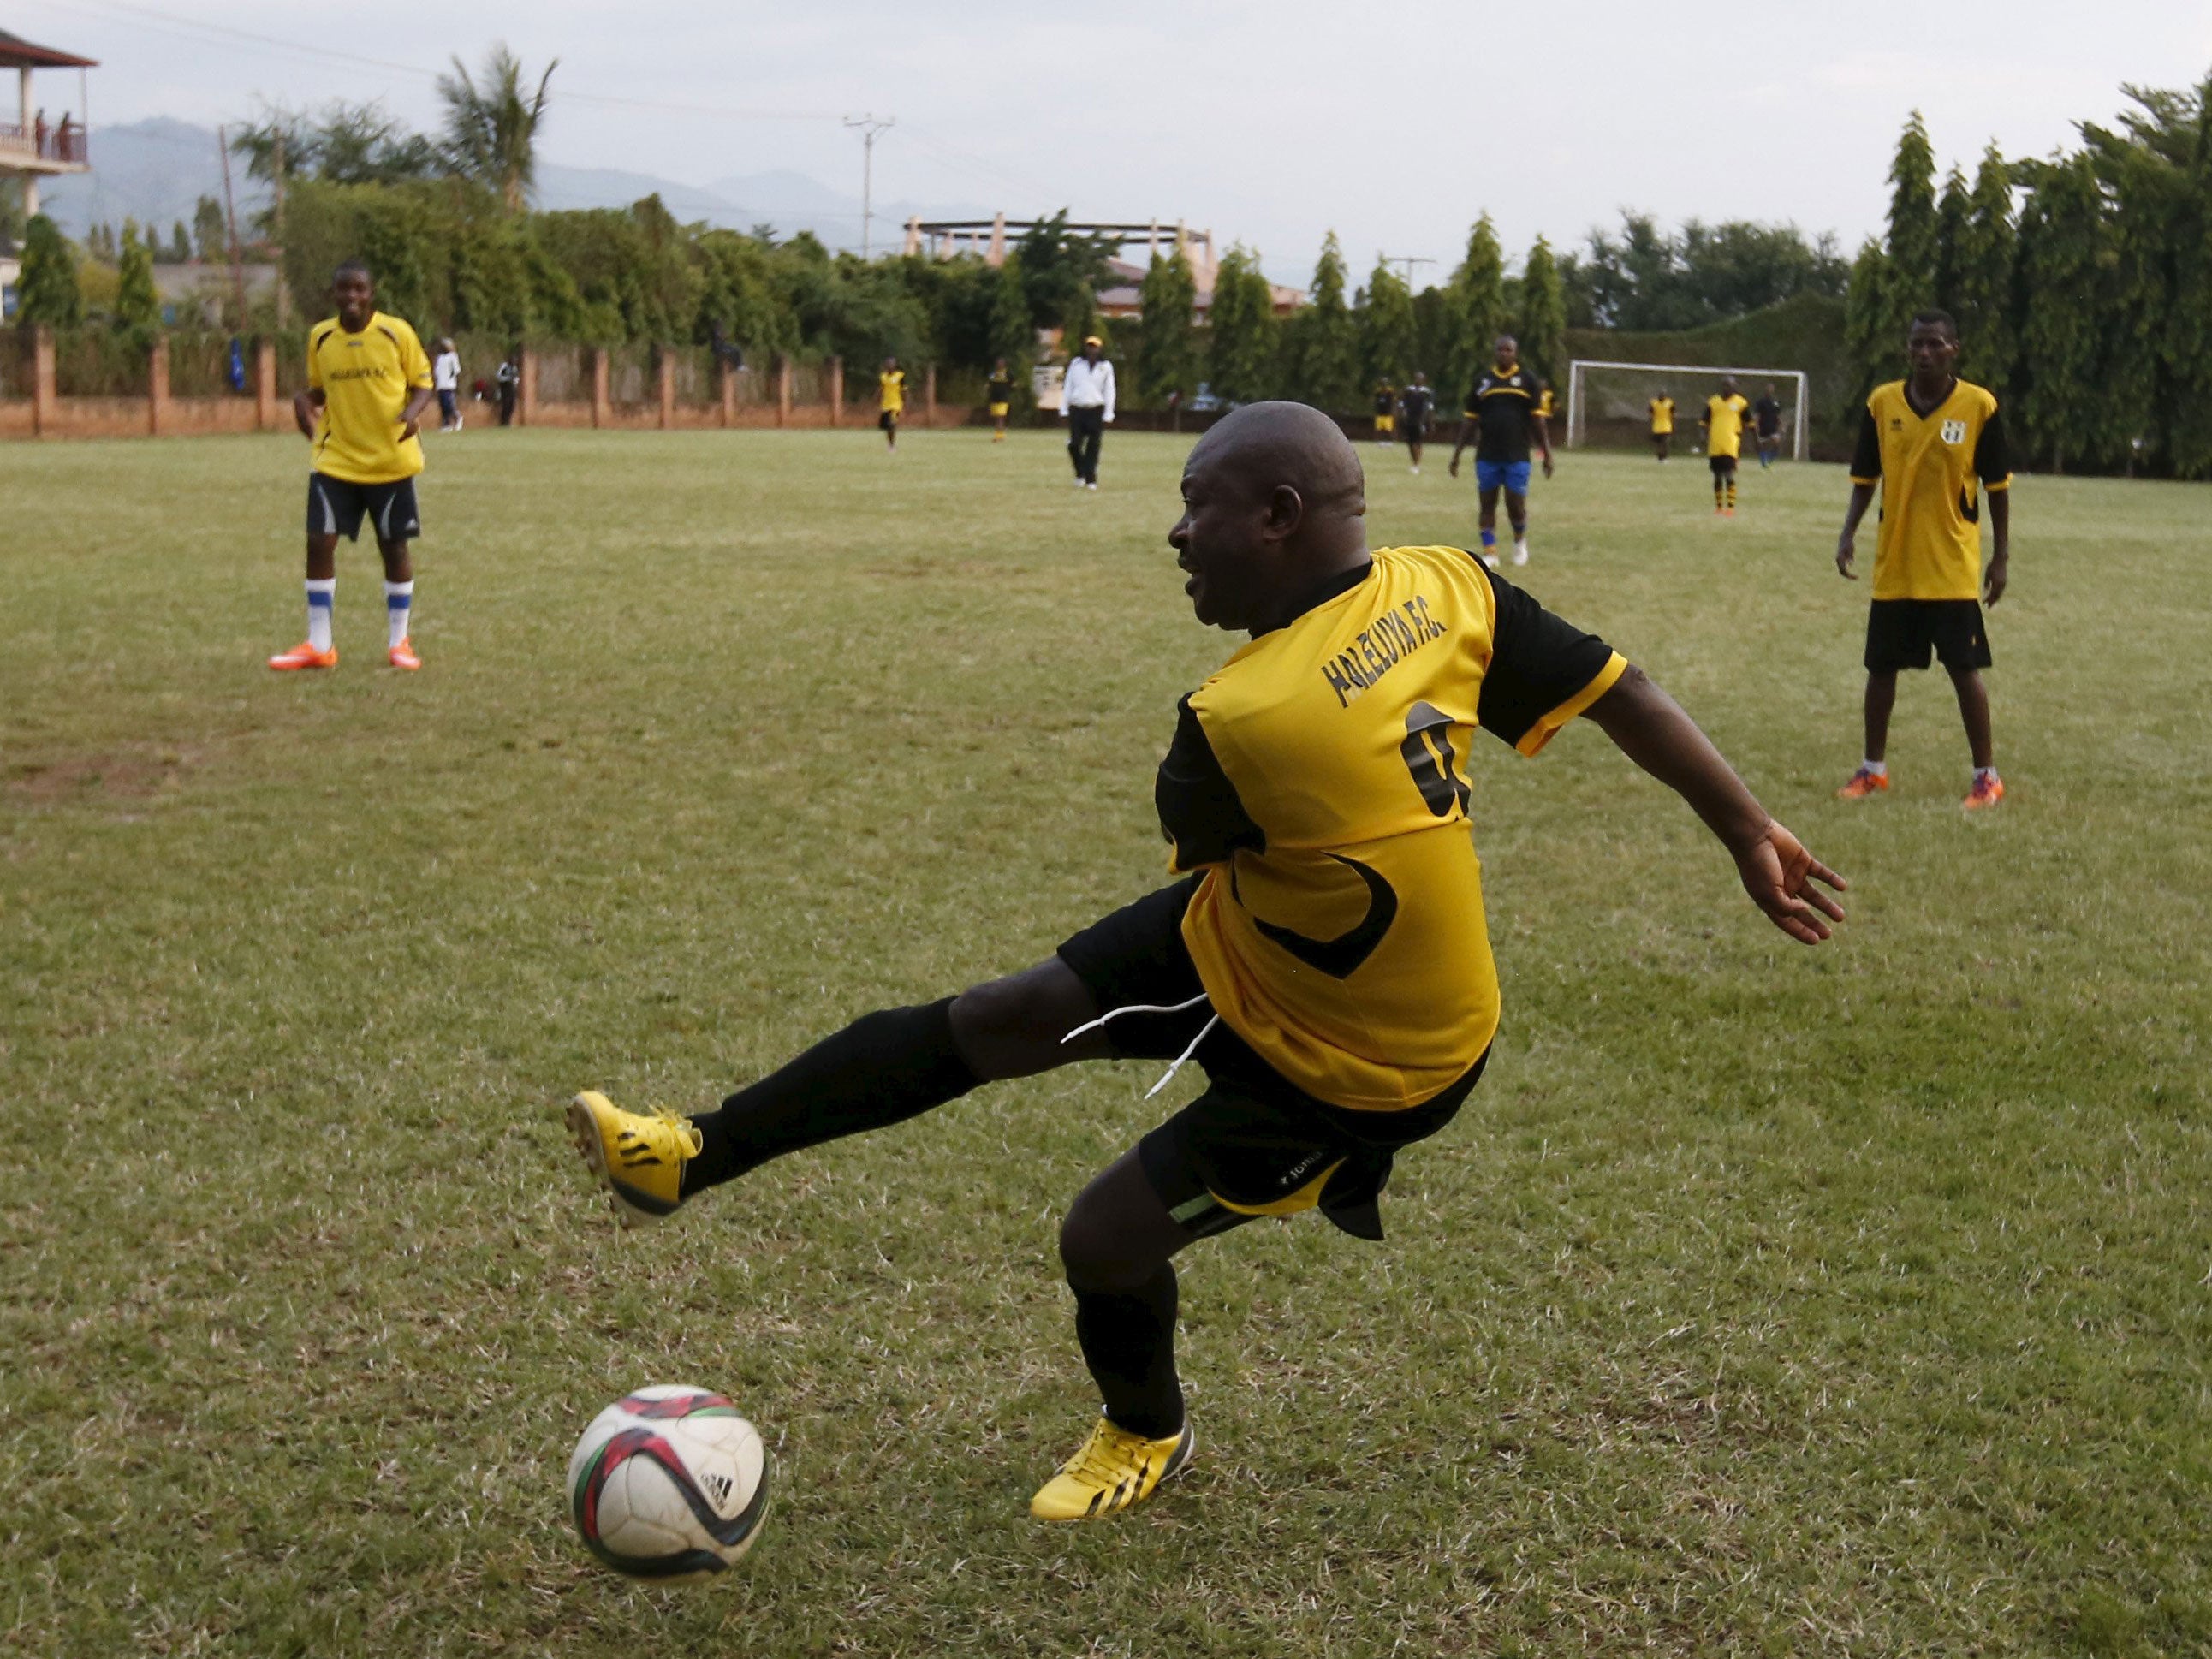 Burundi's President Pierre Nkurunziza kicks the ball during a soccer game